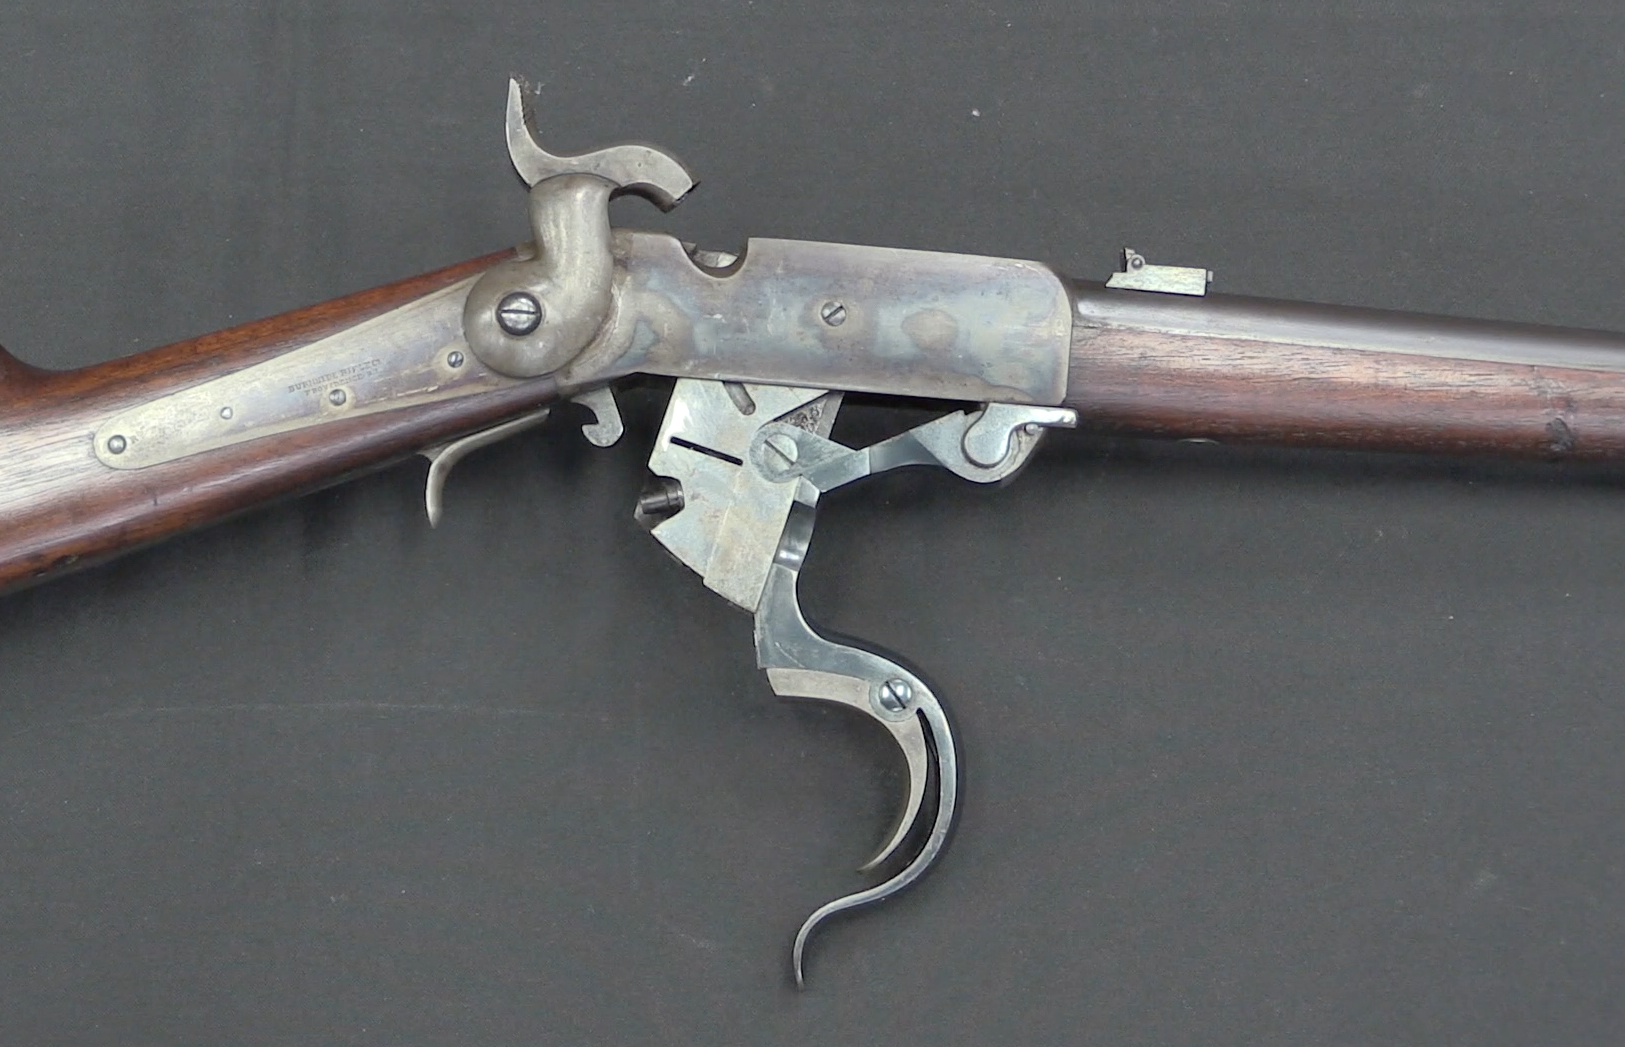 America's First Metallic Cartridge: The Burnside Carbine